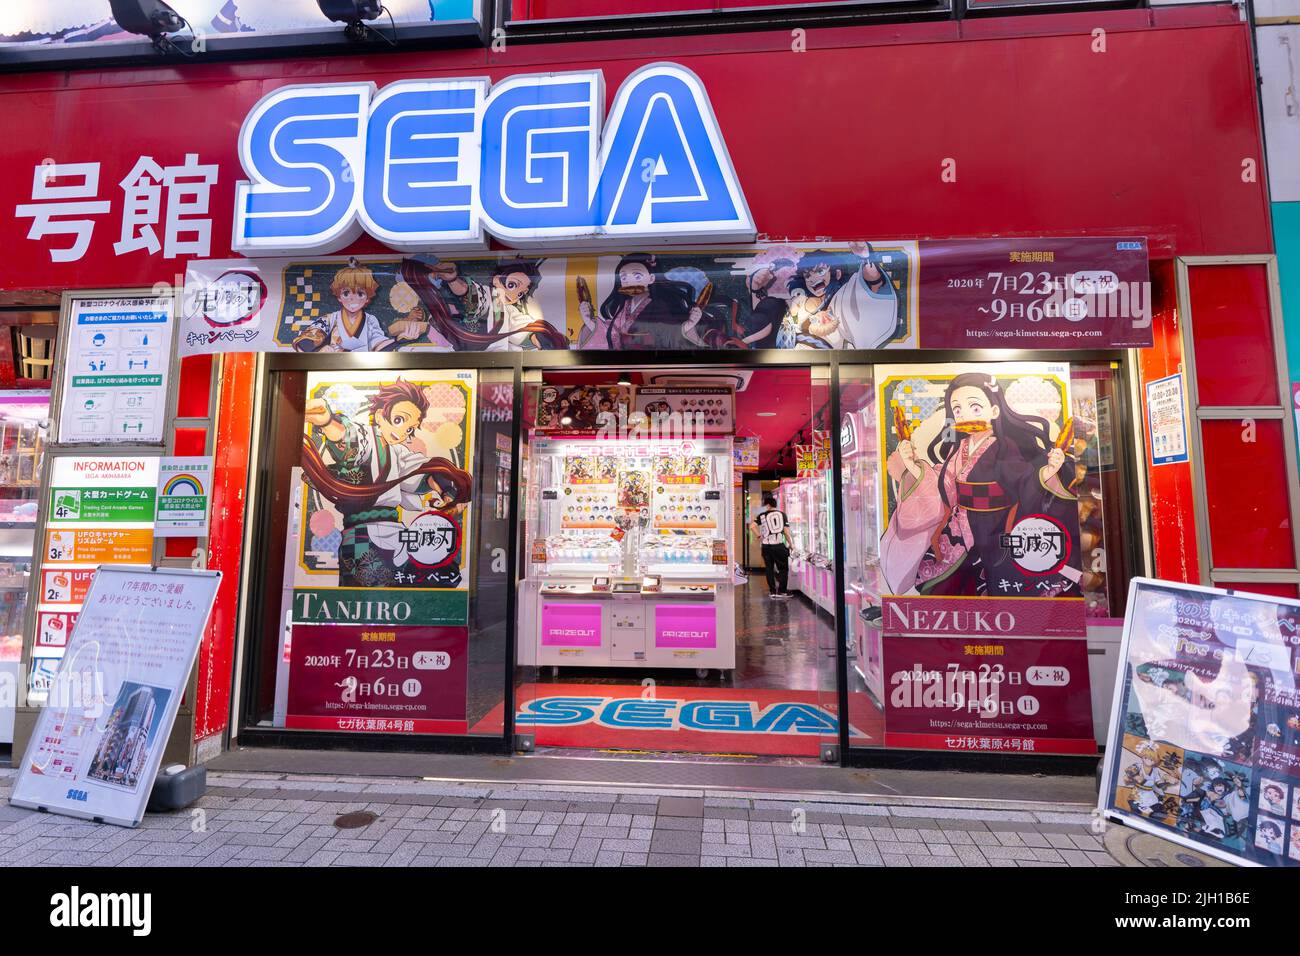 Akihabara, Japan- August 26, 2020: Anime decorations cover an arcade center in Akihabara. Stock Photo